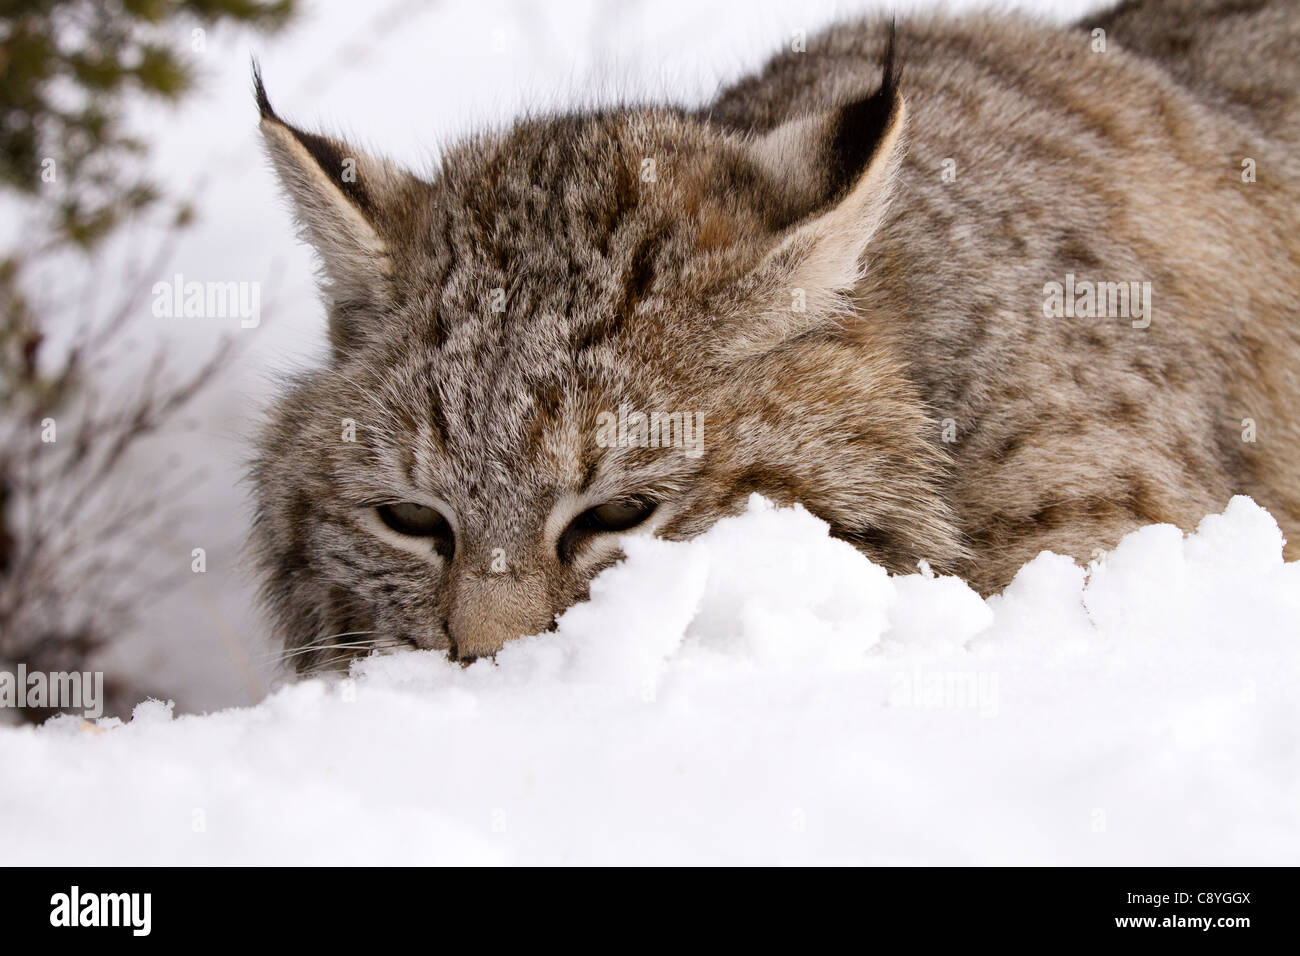 Bobcat, Felis rufus, Lynx rufus, hunting in the snow Stock Photo